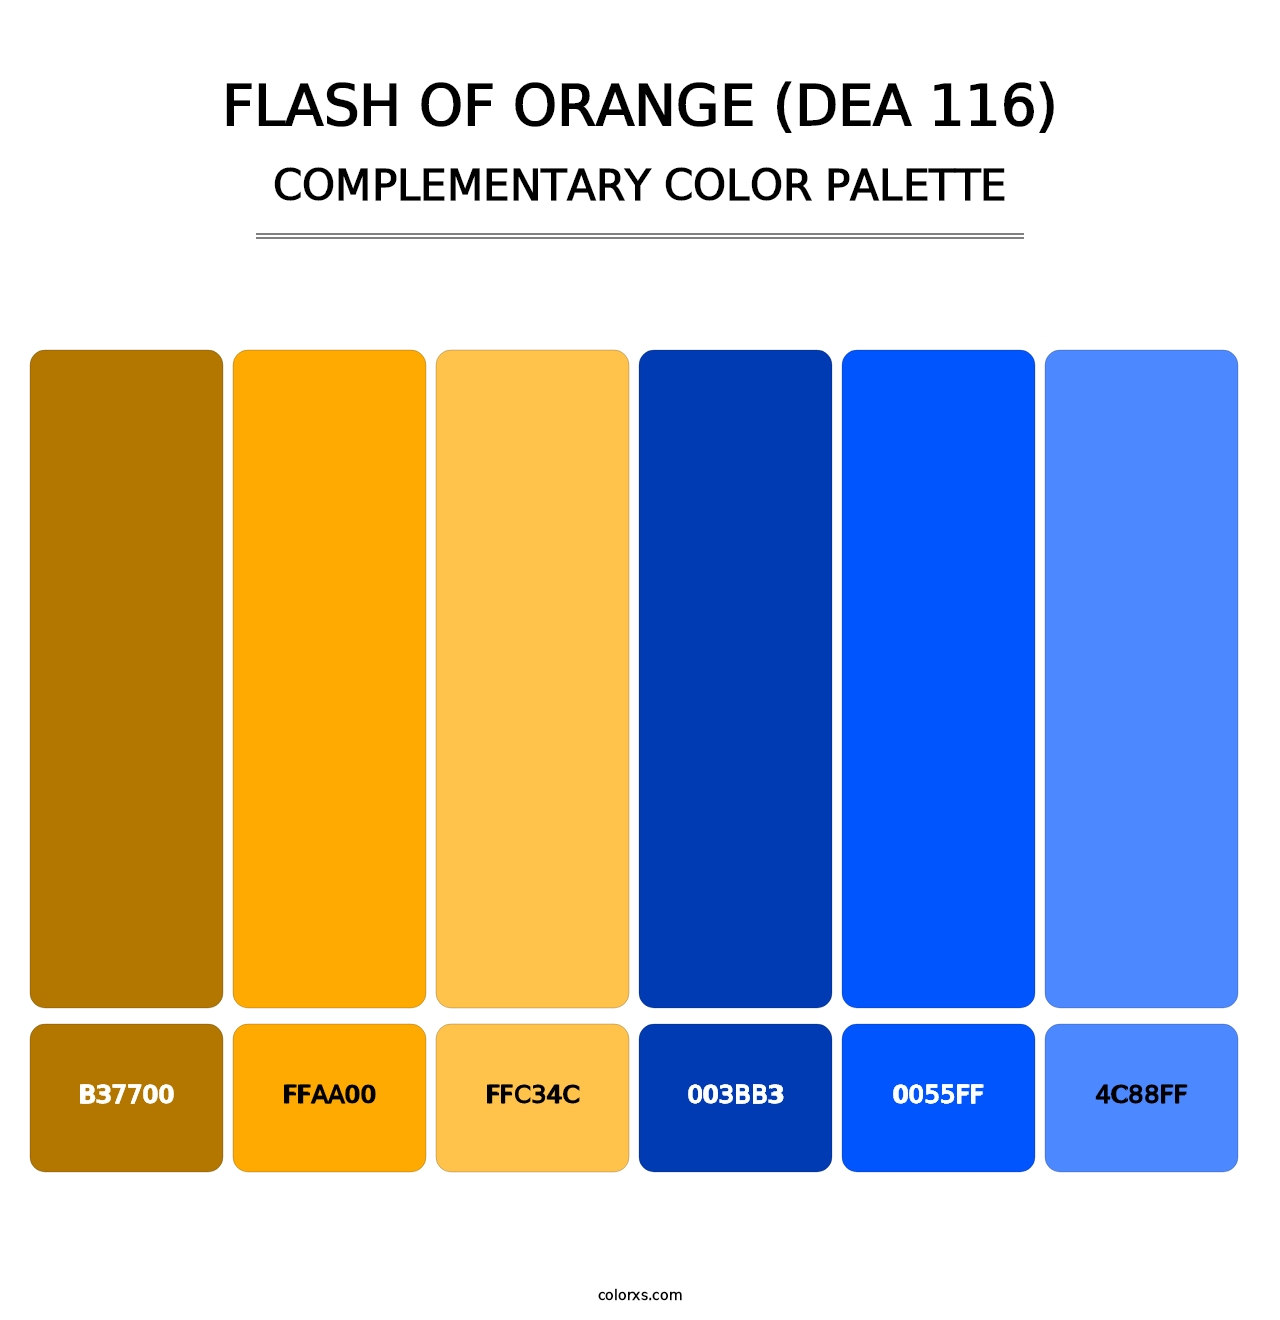 Flash of Orange (DEA 116) - Complementary Color Palette